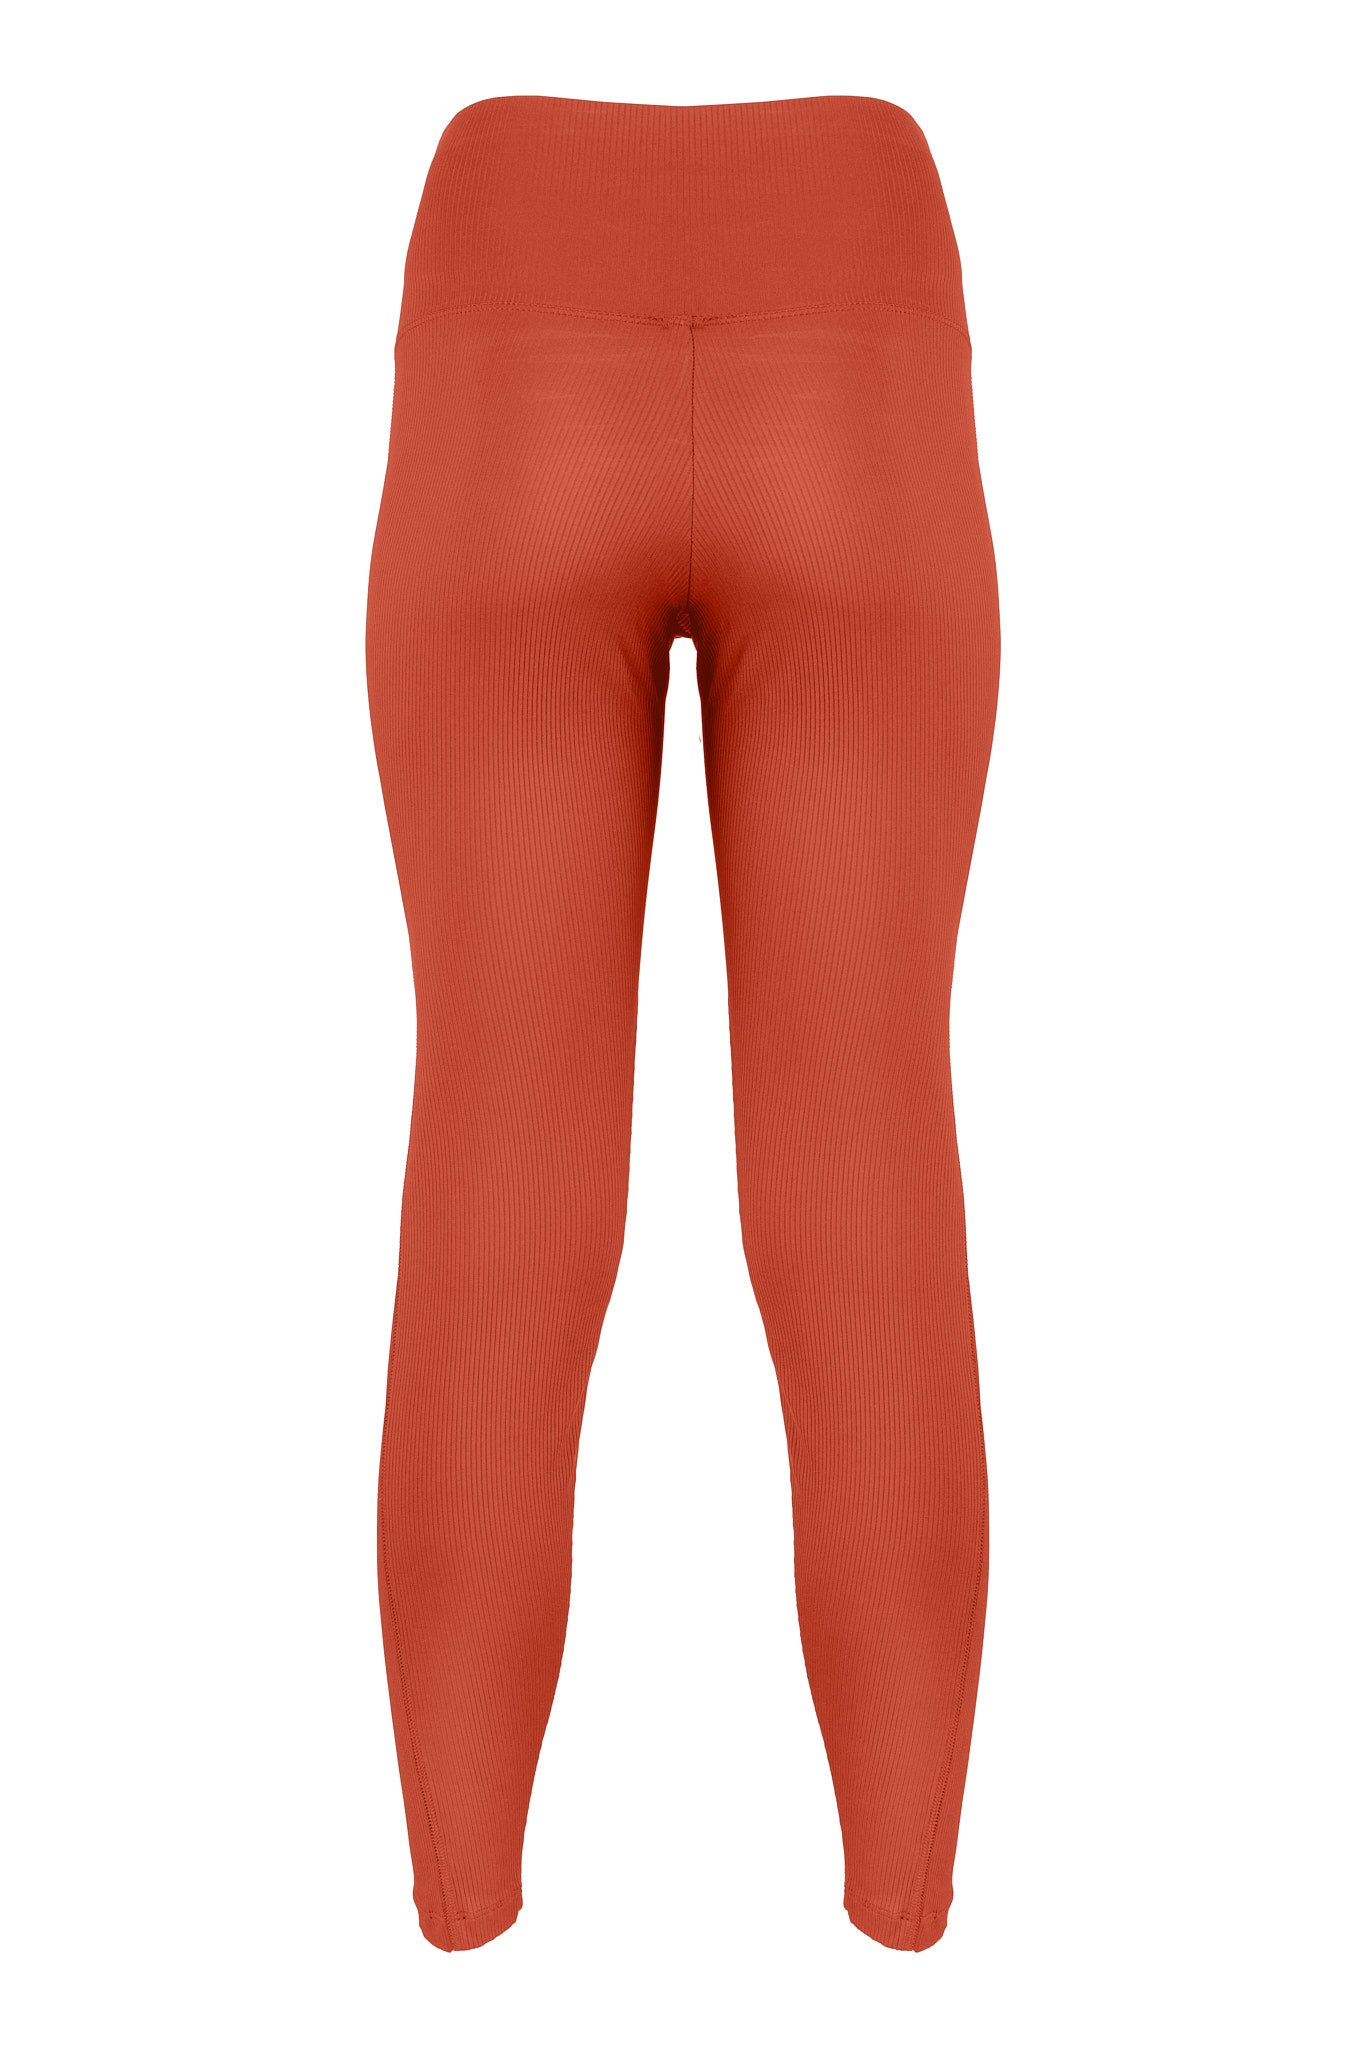 Orange hybrid leggings made of polyamide from MOYA KALA